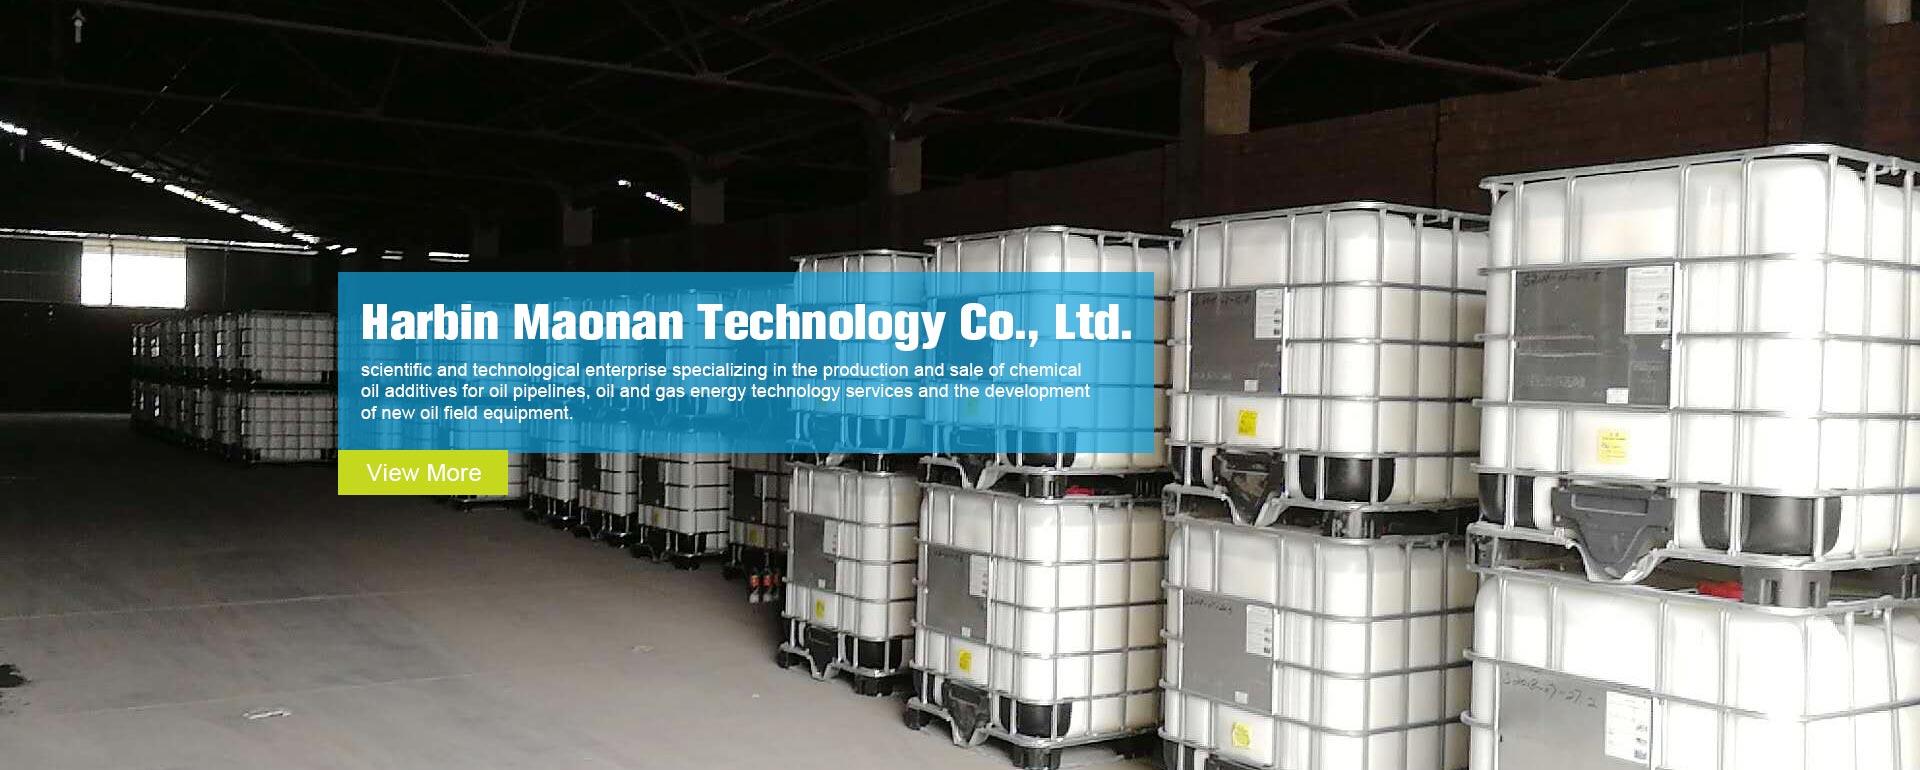 Harbin Maonan Technology Co., Ltd.